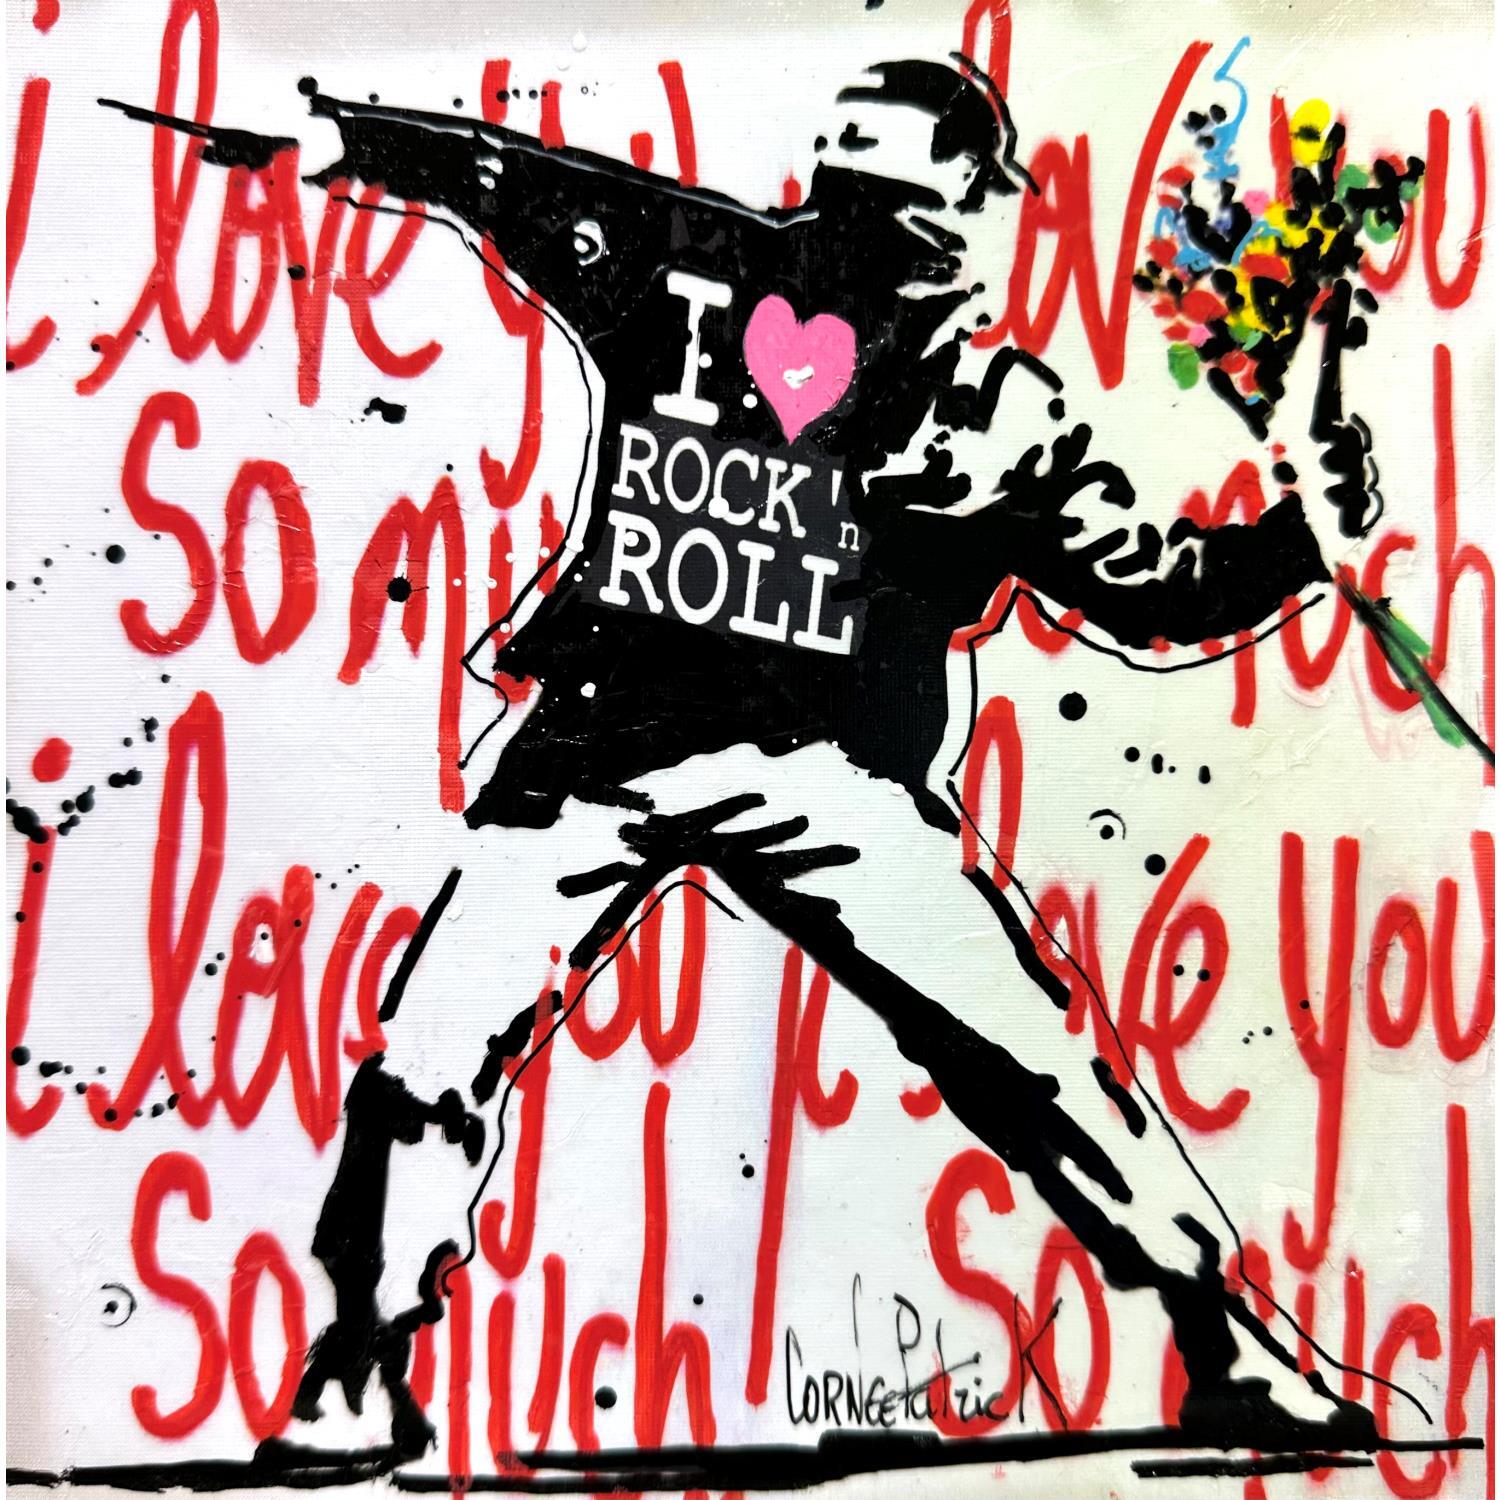 ▷ Tableau Street Art inspiration Banksy